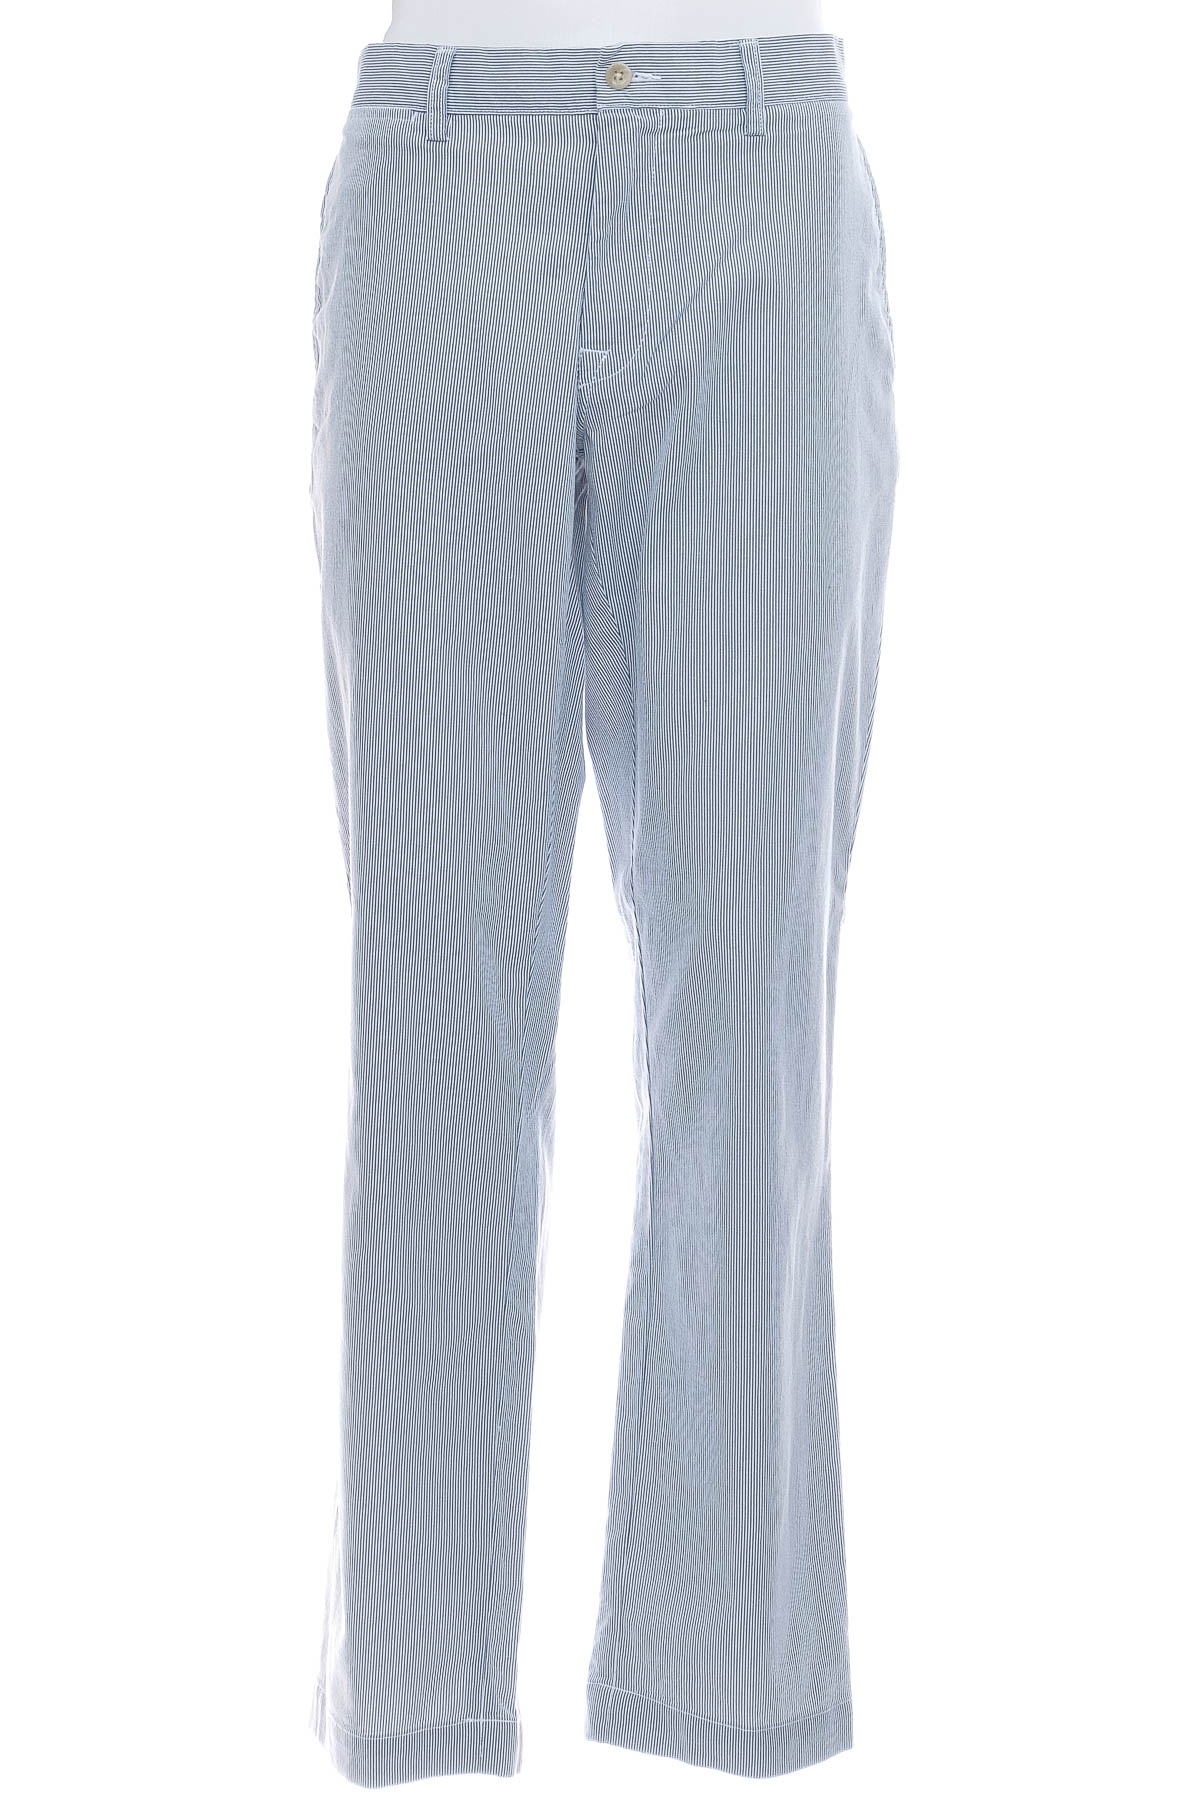 Men's trousers - POLO RALPH LAUREN - 0